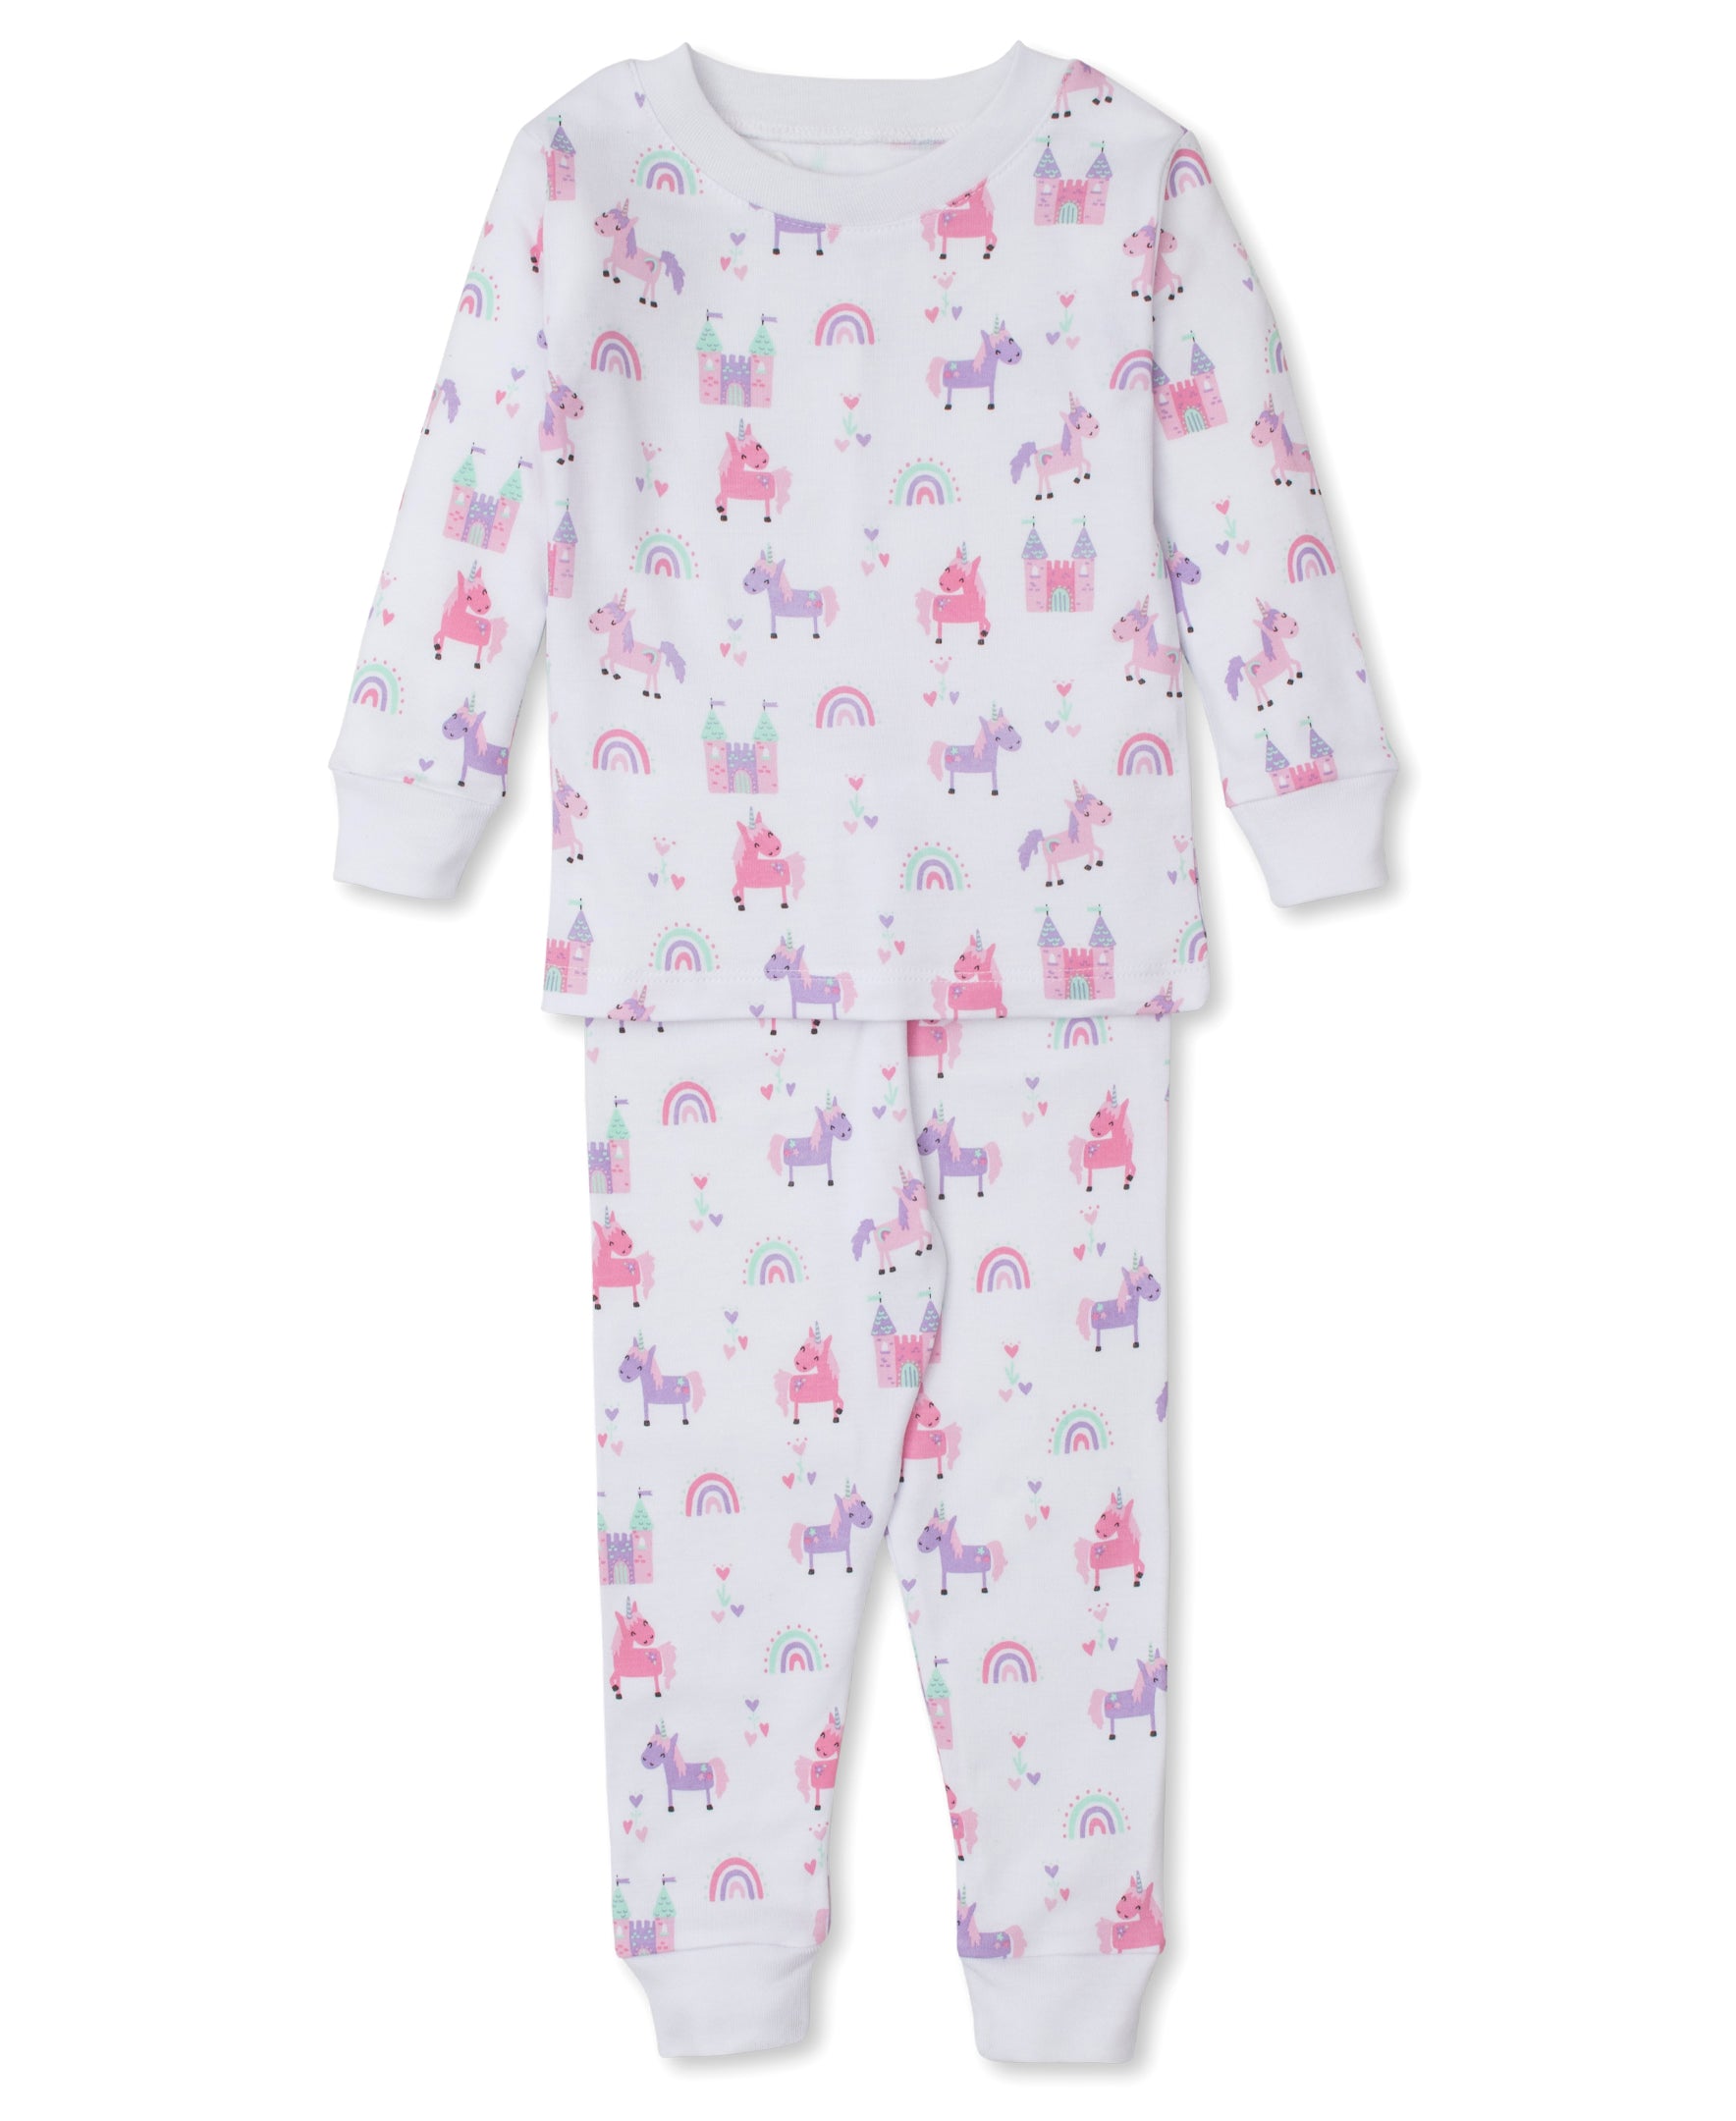 Stay Magical Toddler Pajama Set - Kissy Kissy